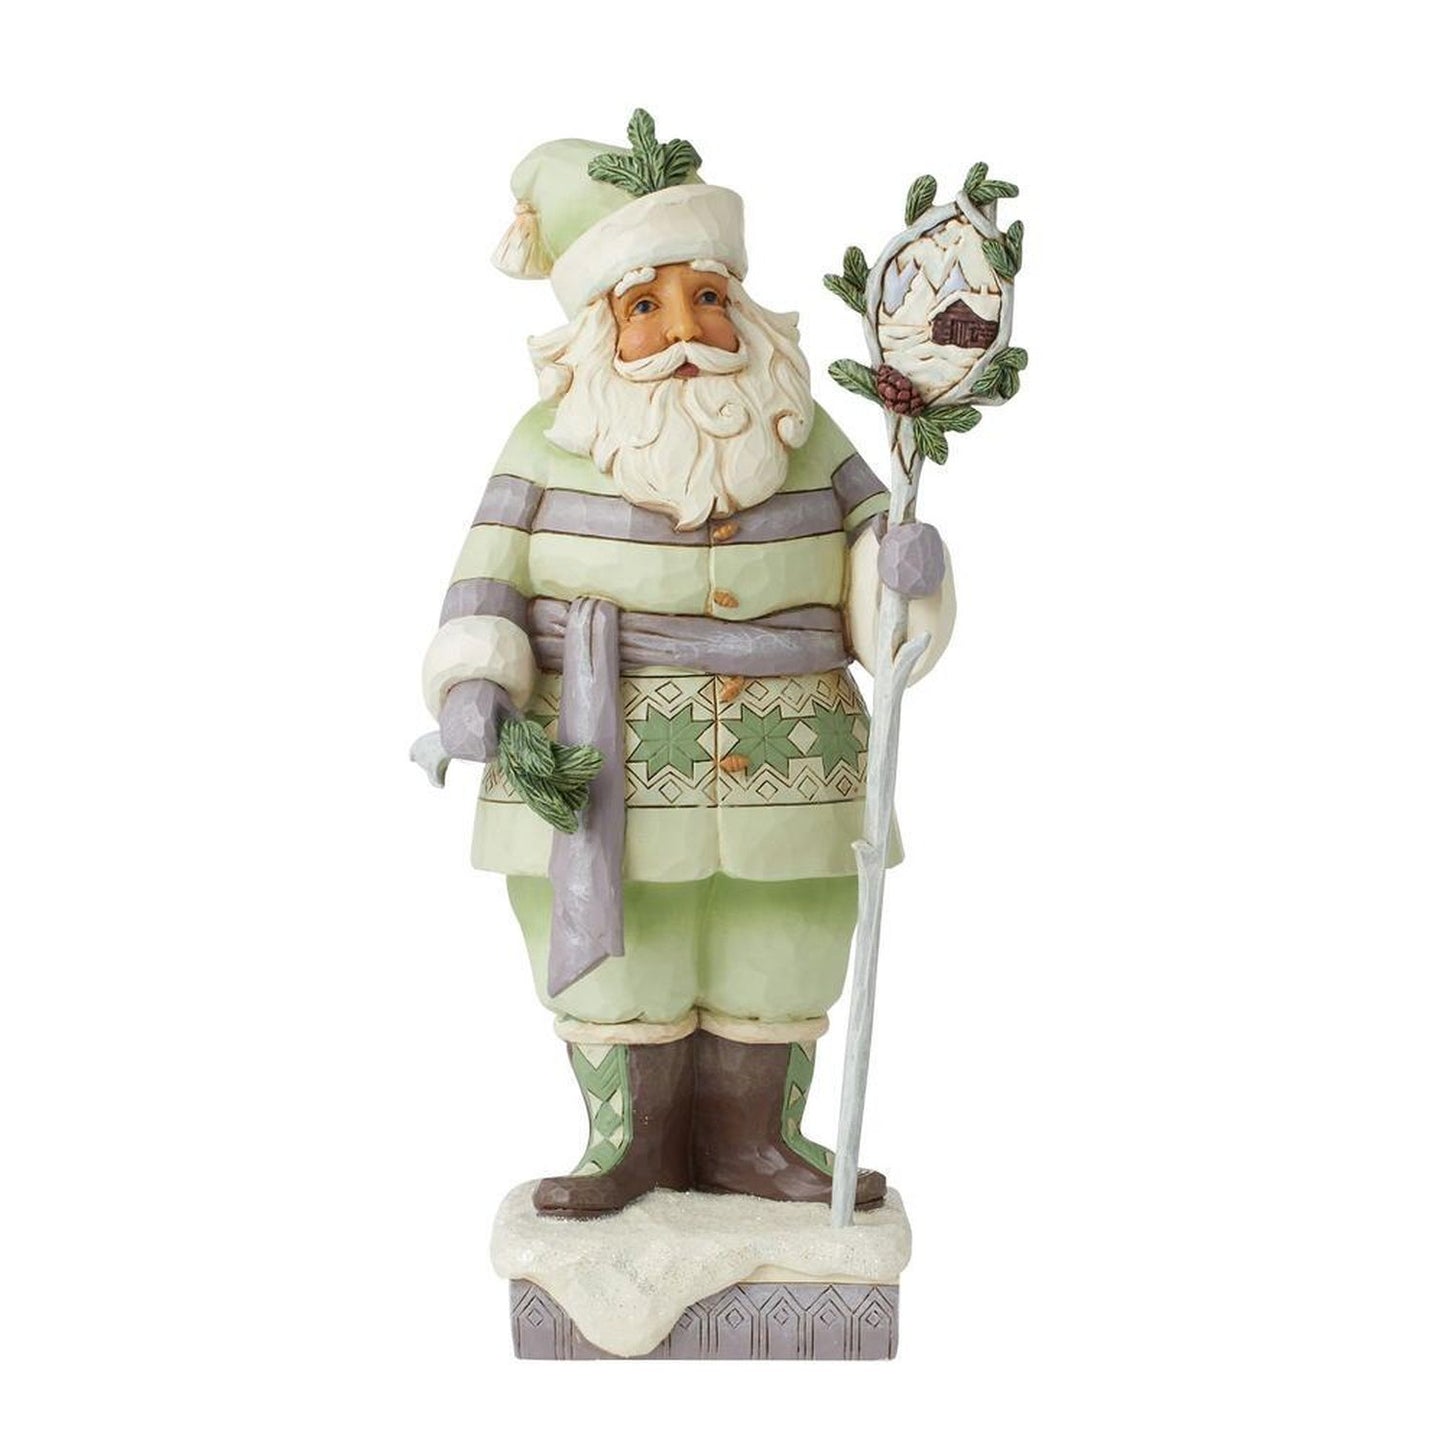 Enesco Jim Shore Heartwood Creek White Woodland Santa Withstaff Figurine